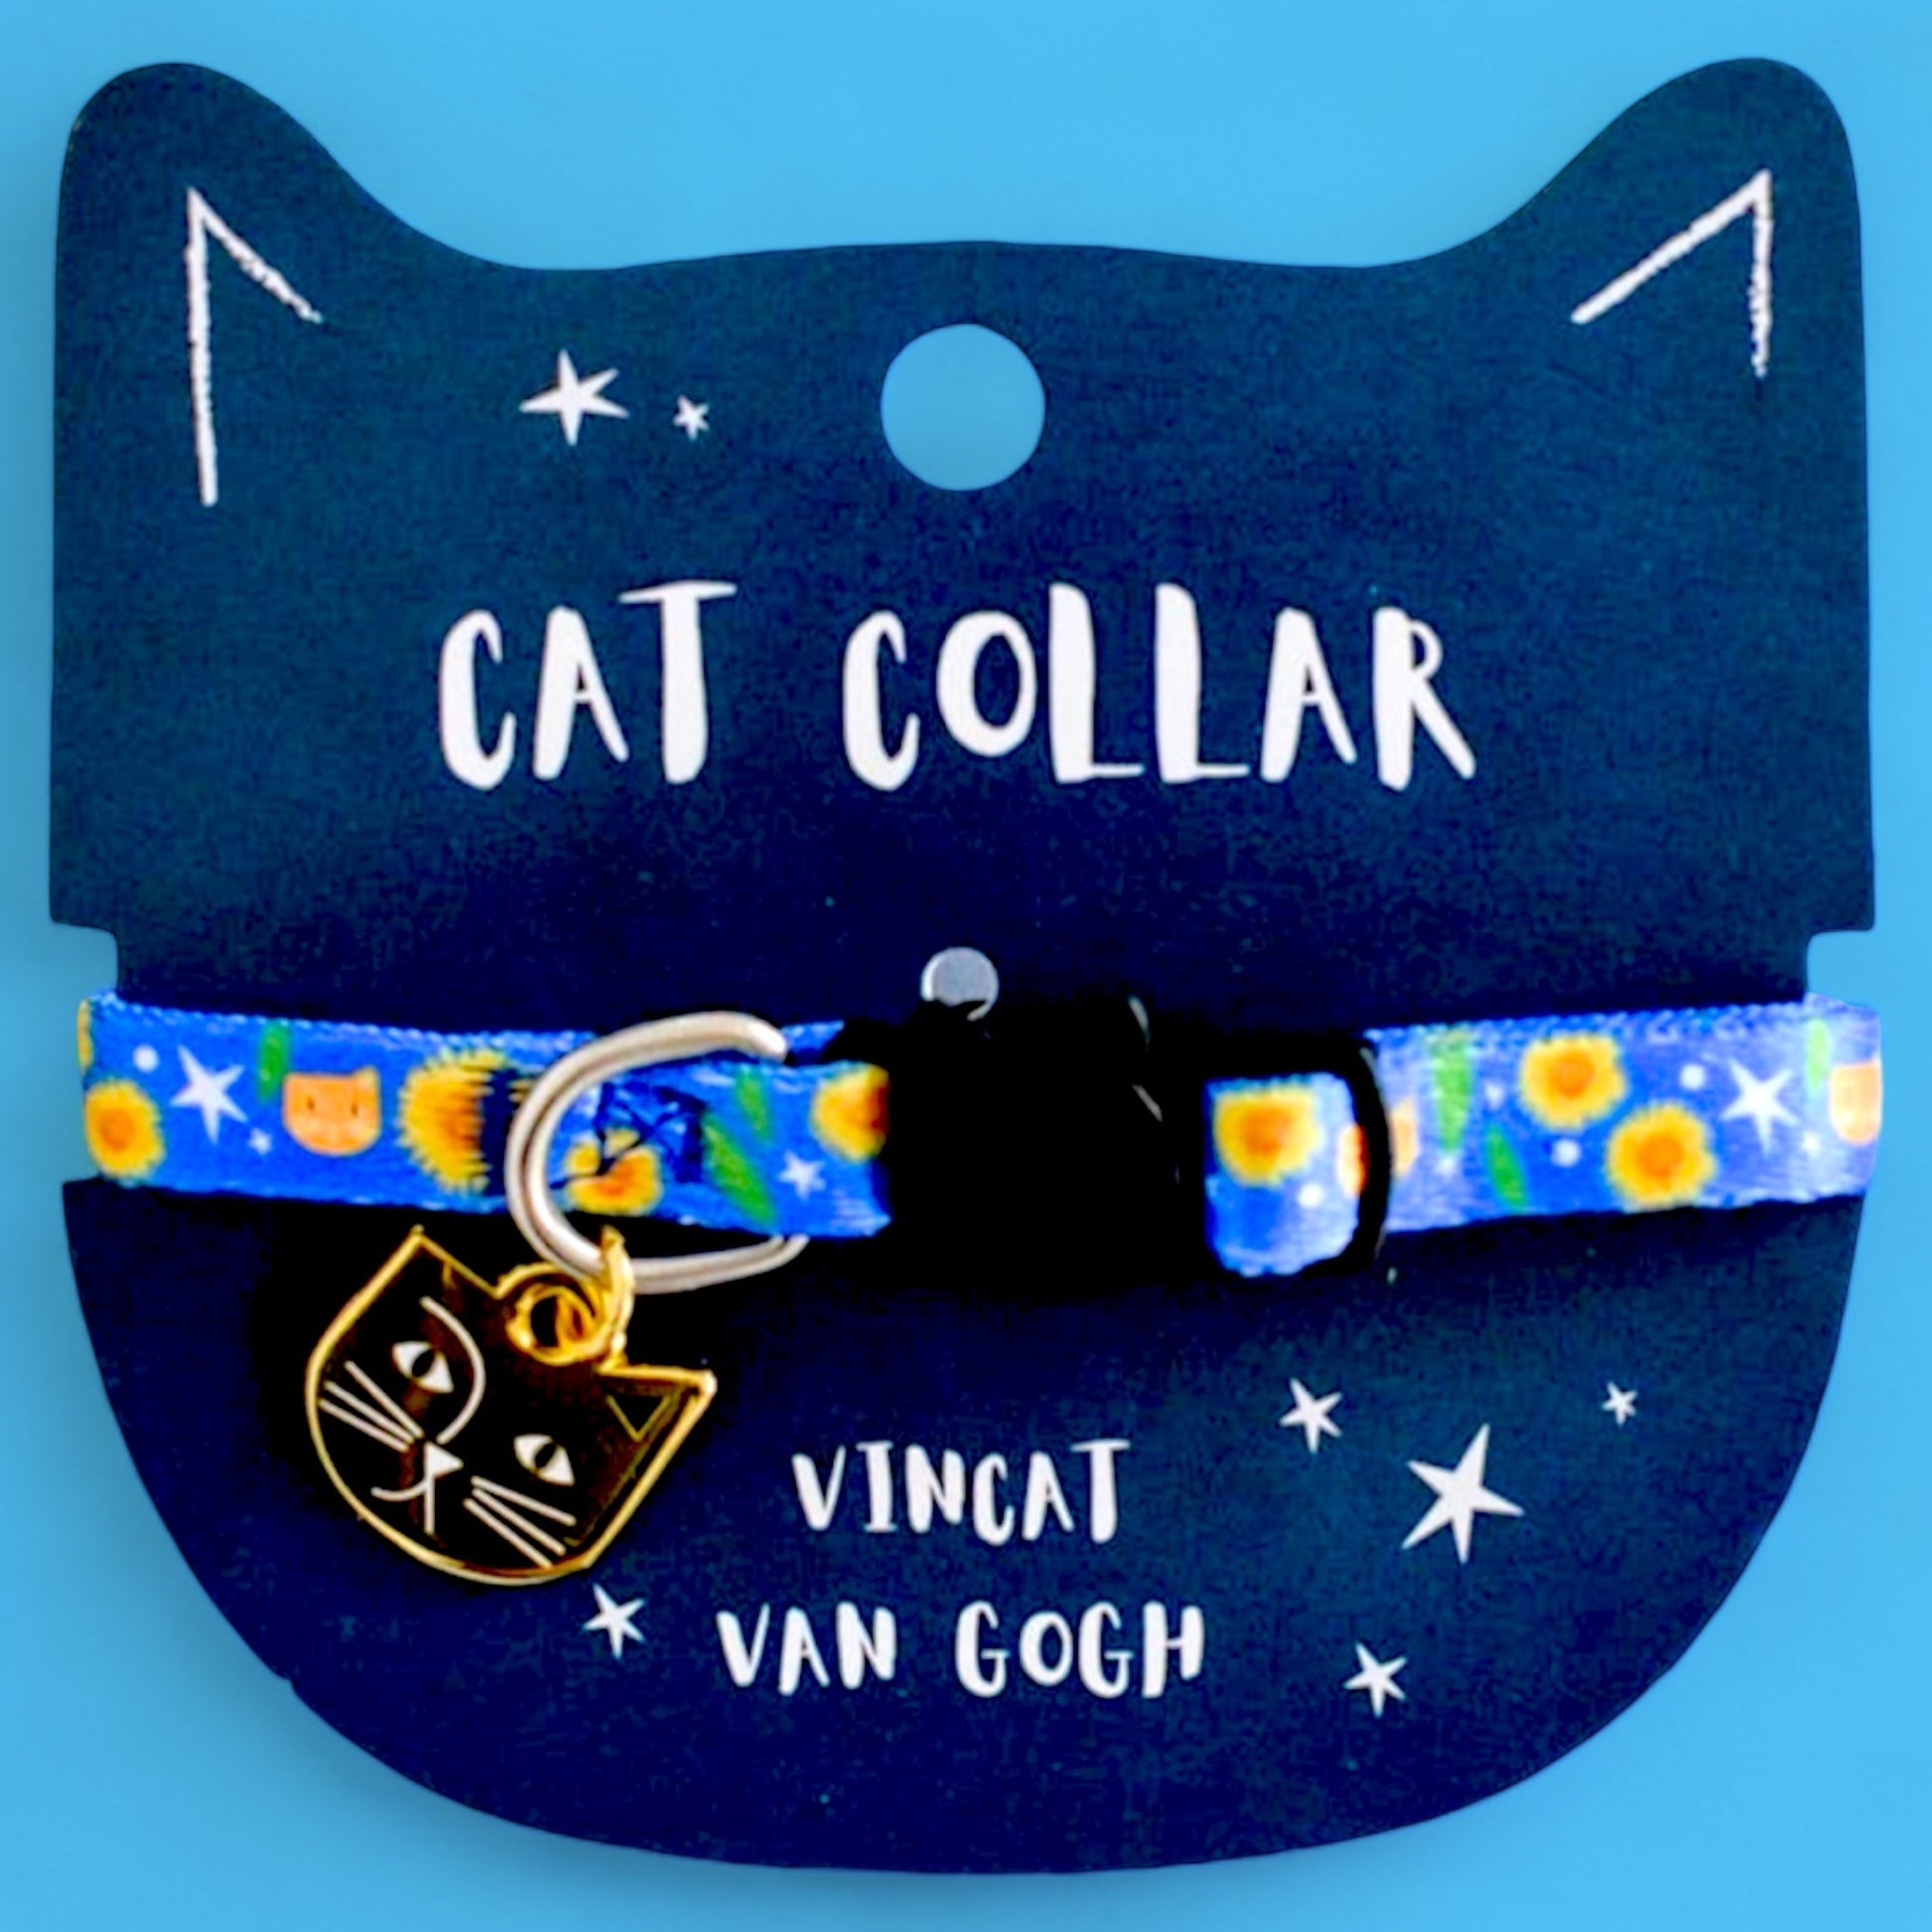 Vincat Van Gogh Cat Collar - Hella Kitsch